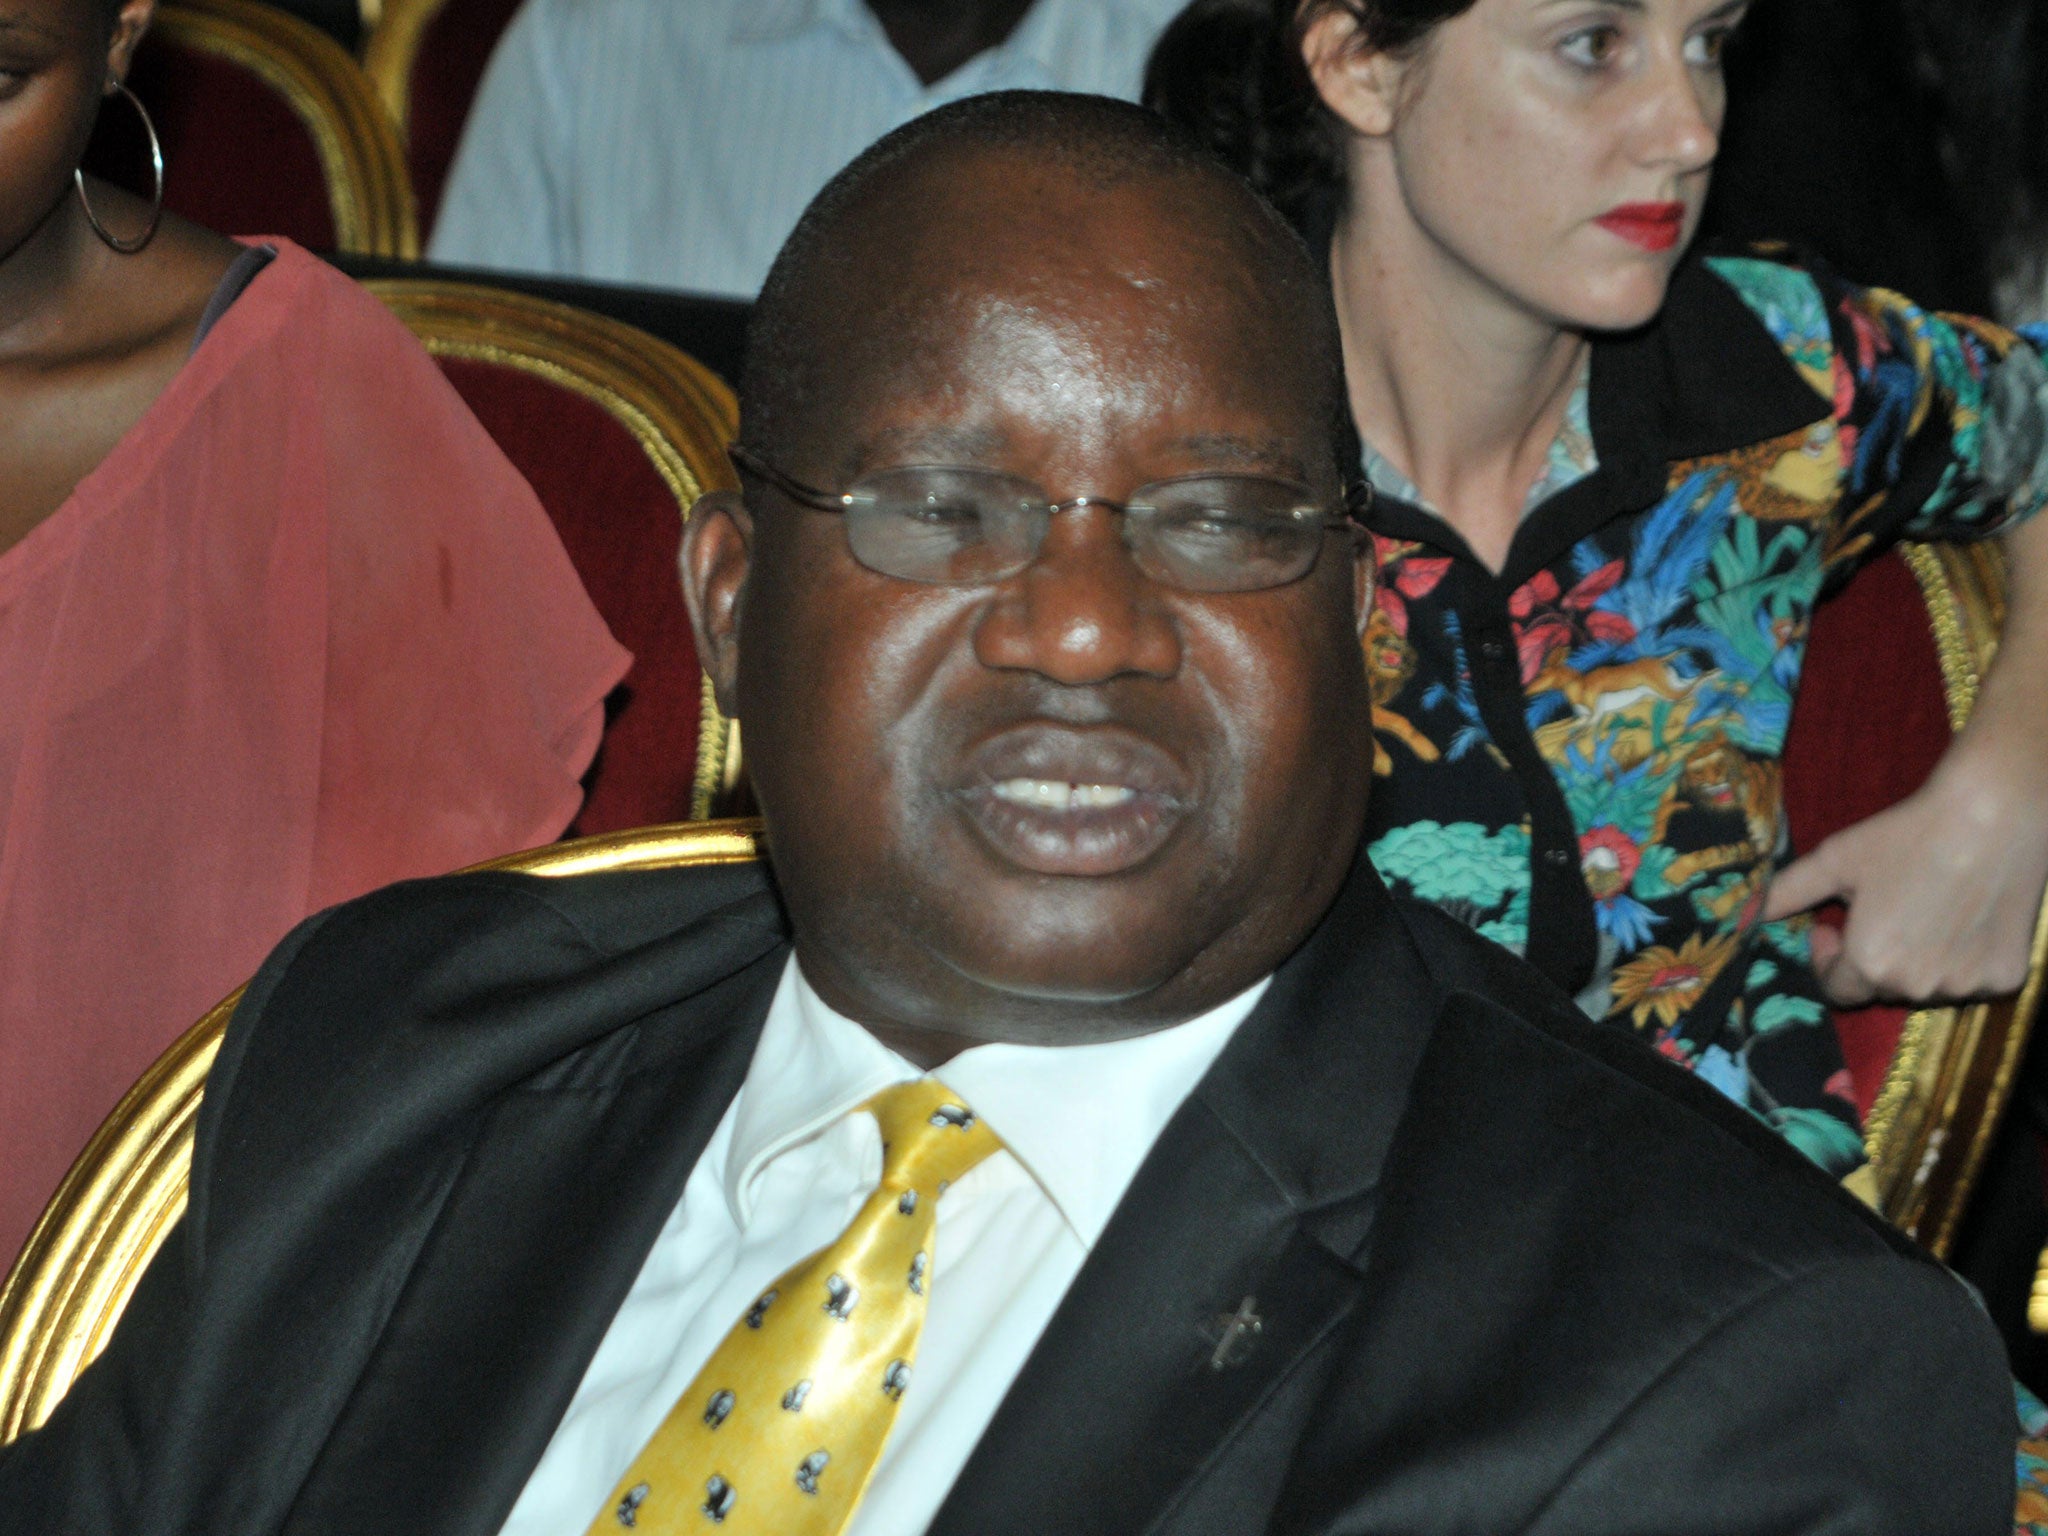 Uganda's Ethics and Integrity Minister, Simon Lokodo, in 2014